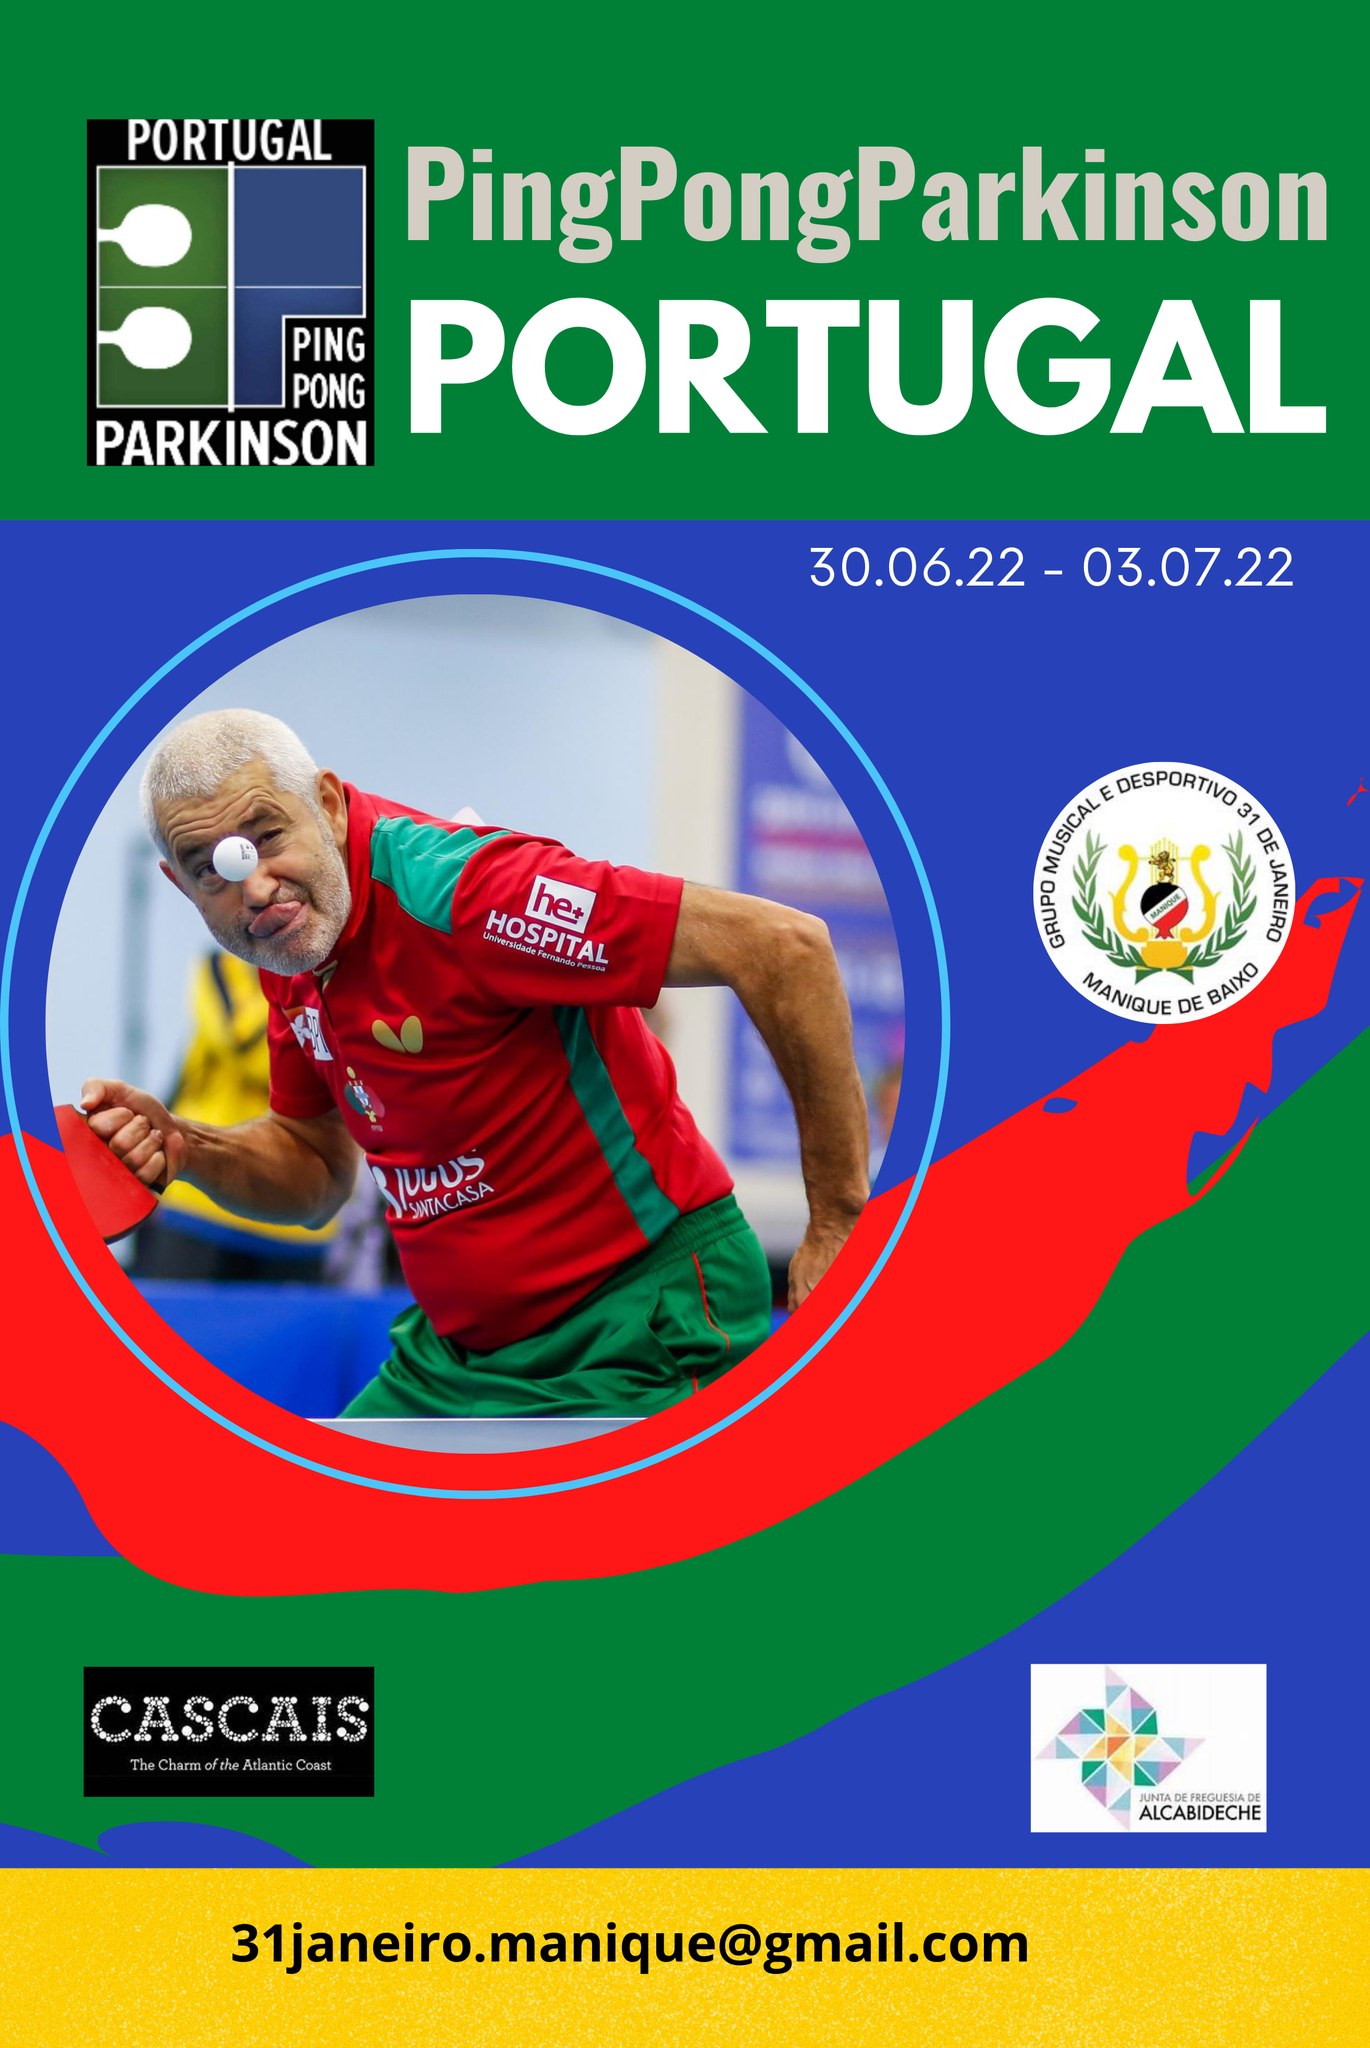 PingPongParkinson Portugal Open 2022